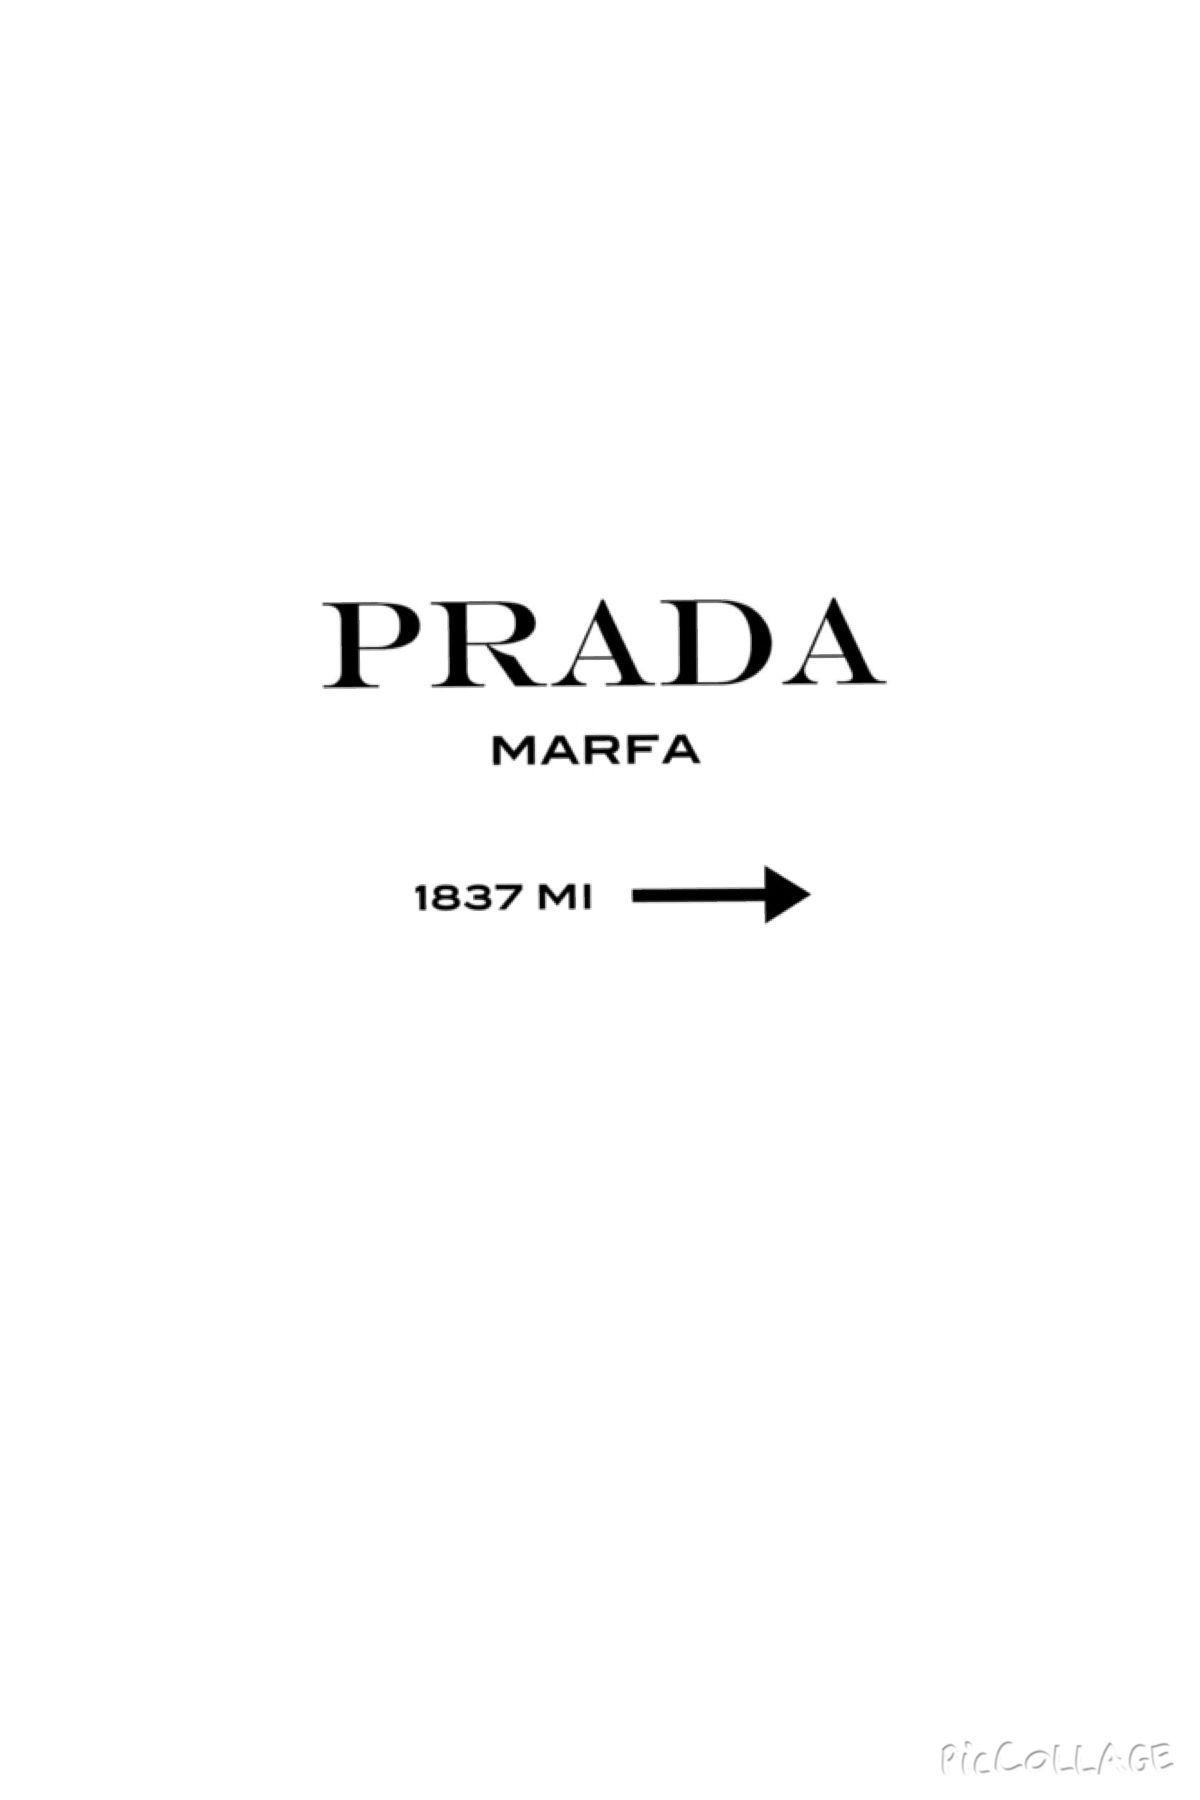 Prada Marfa Milano iphone wallpaper. illustrations, patterns & art